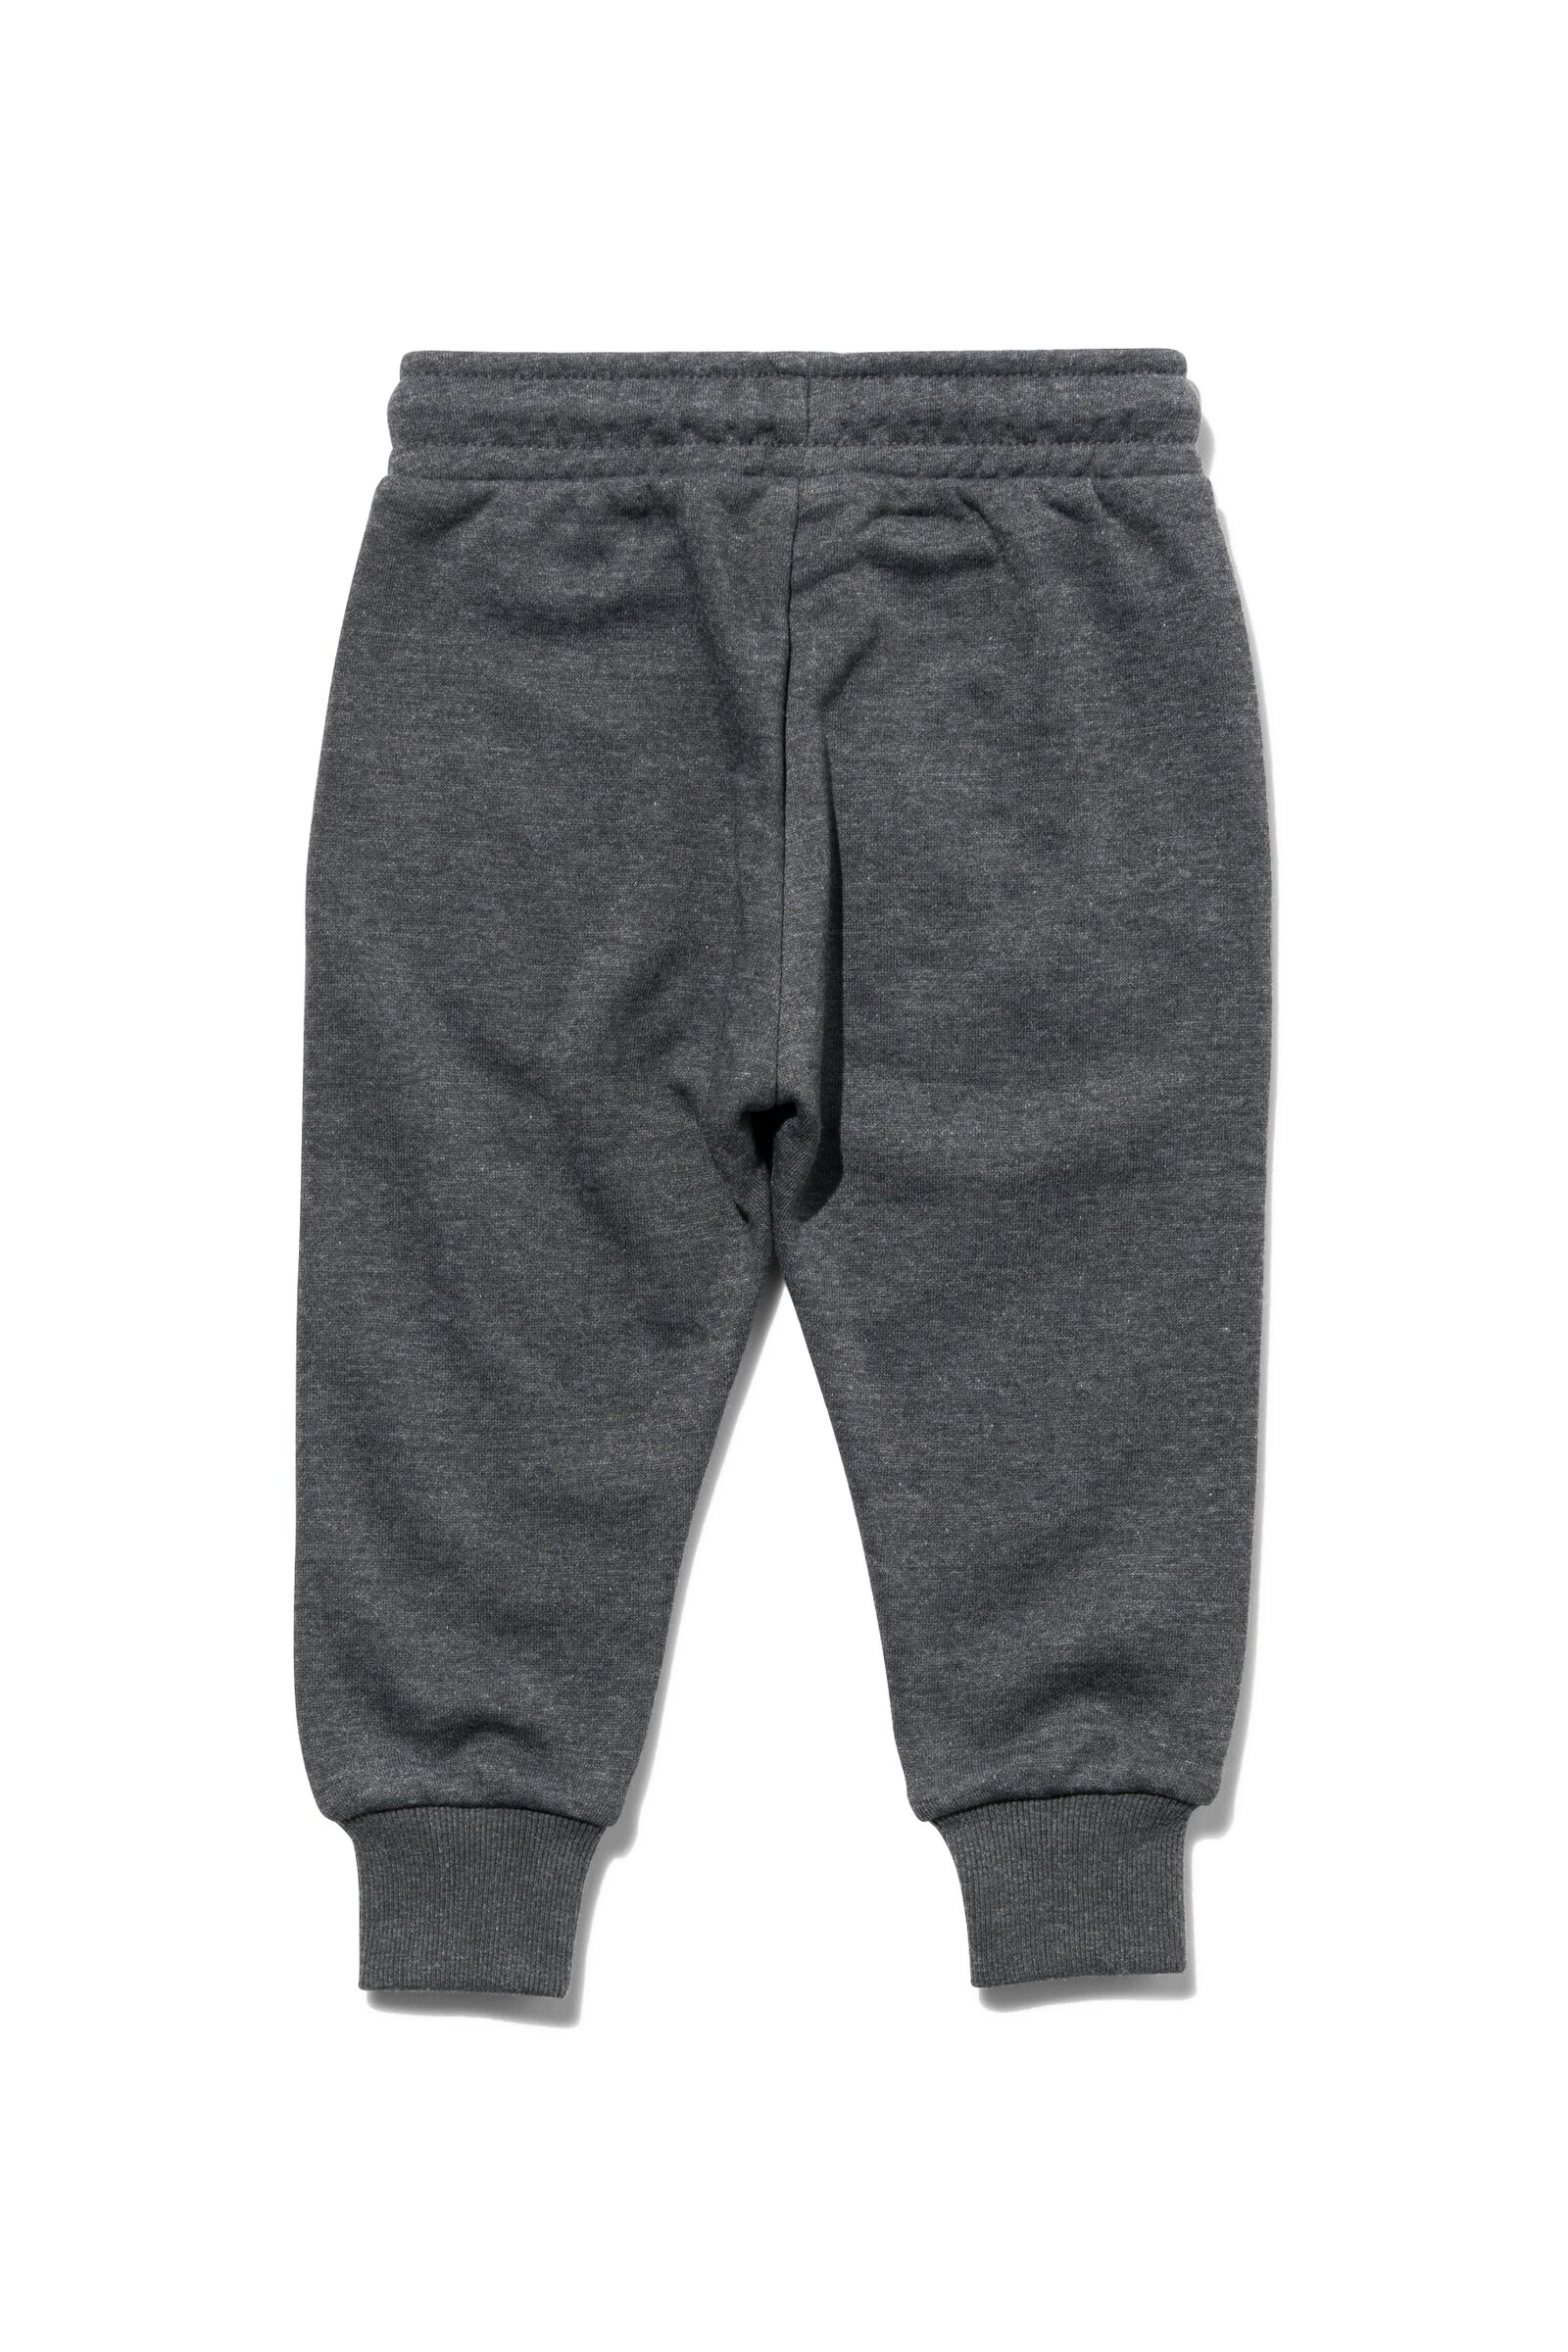 pantalon sweat bébé gris foncé 86 - 33171047 - HEMA